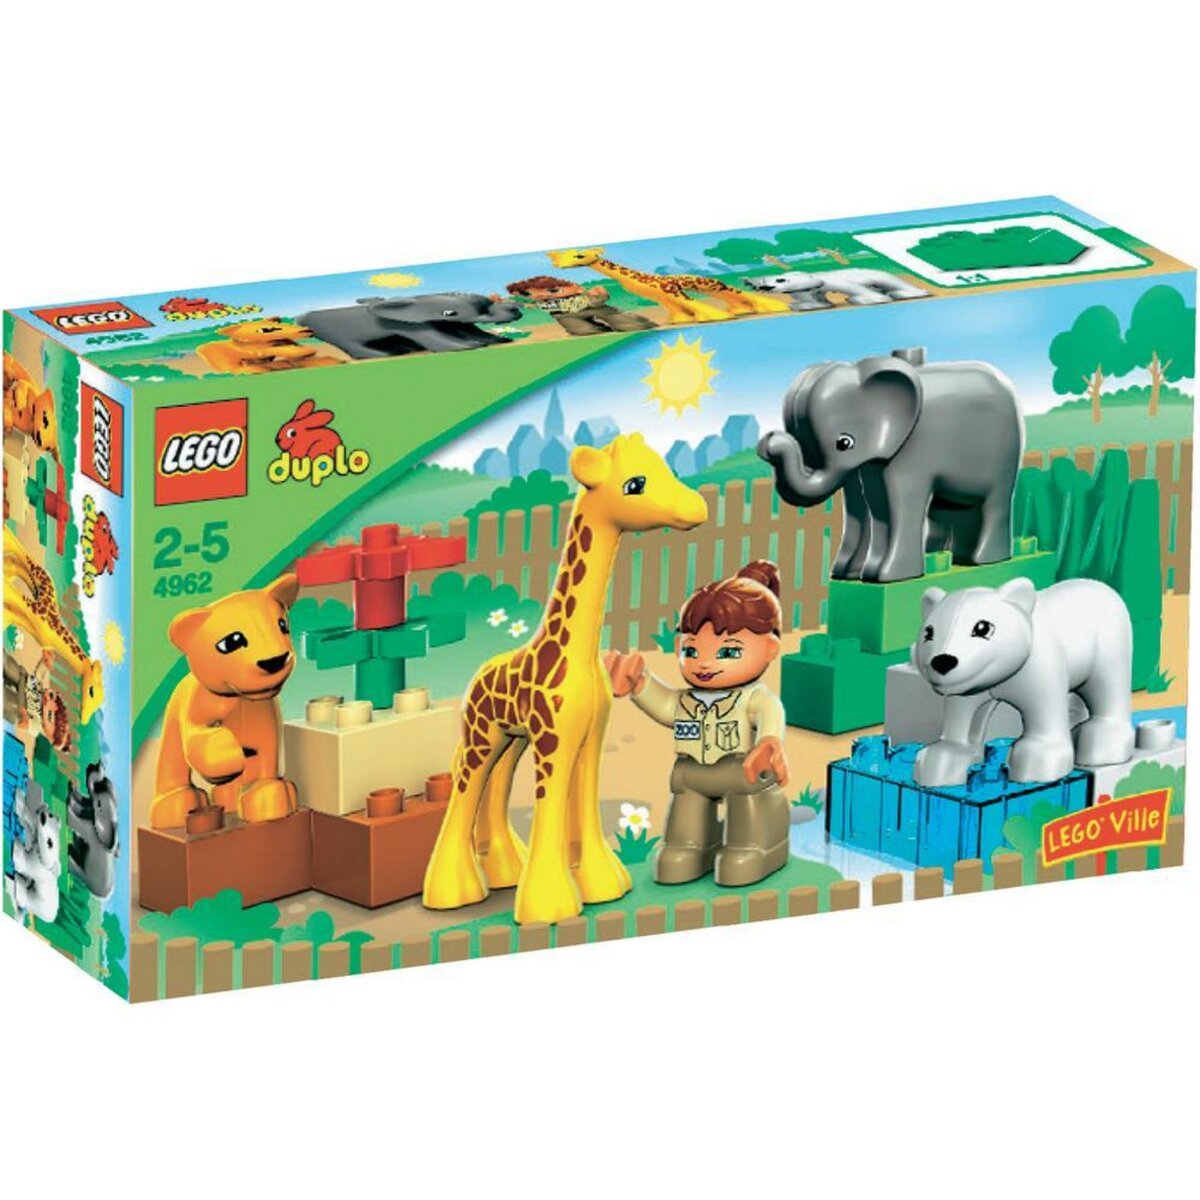 LEGO Duplo 4962